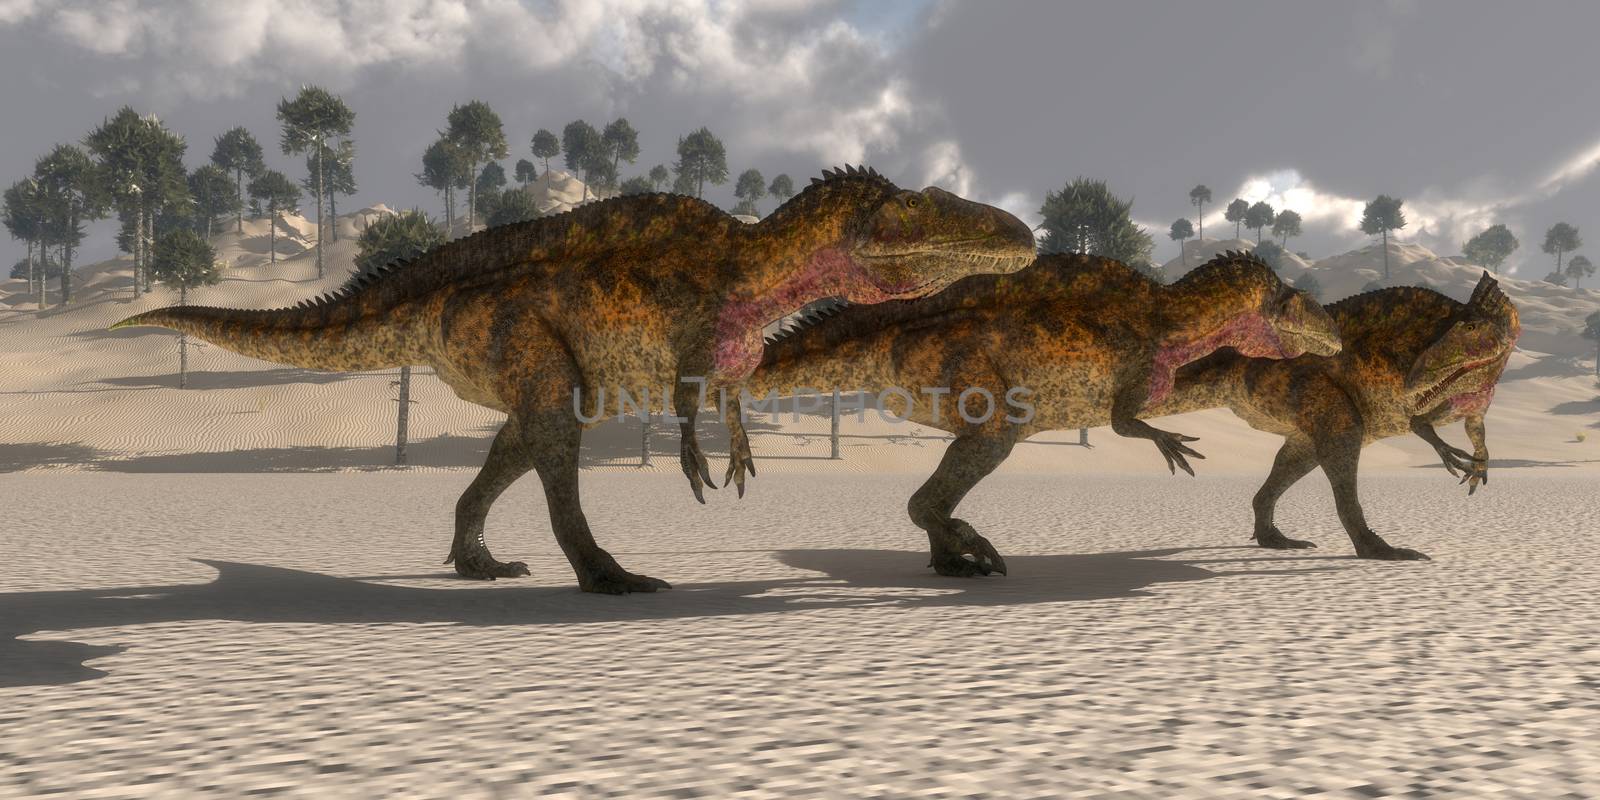 Acrocanthosaurus Dinosaurs by Catmando